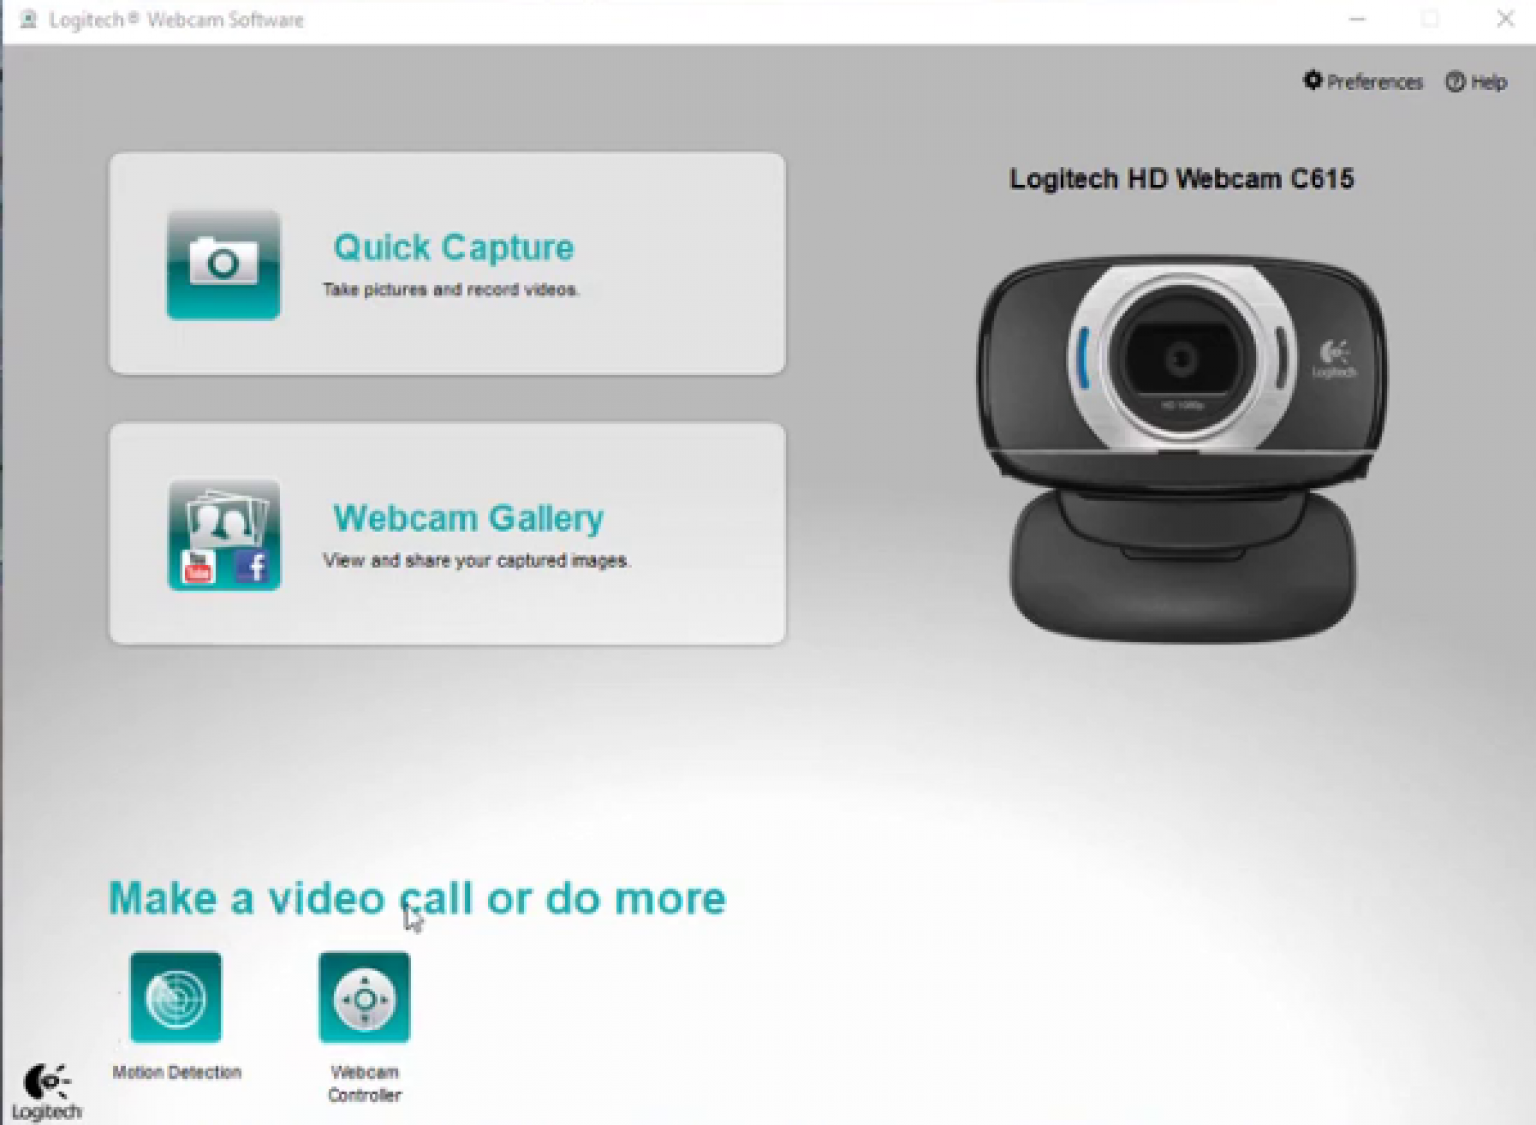 logitech webcam software for windows 7 64 bit free download